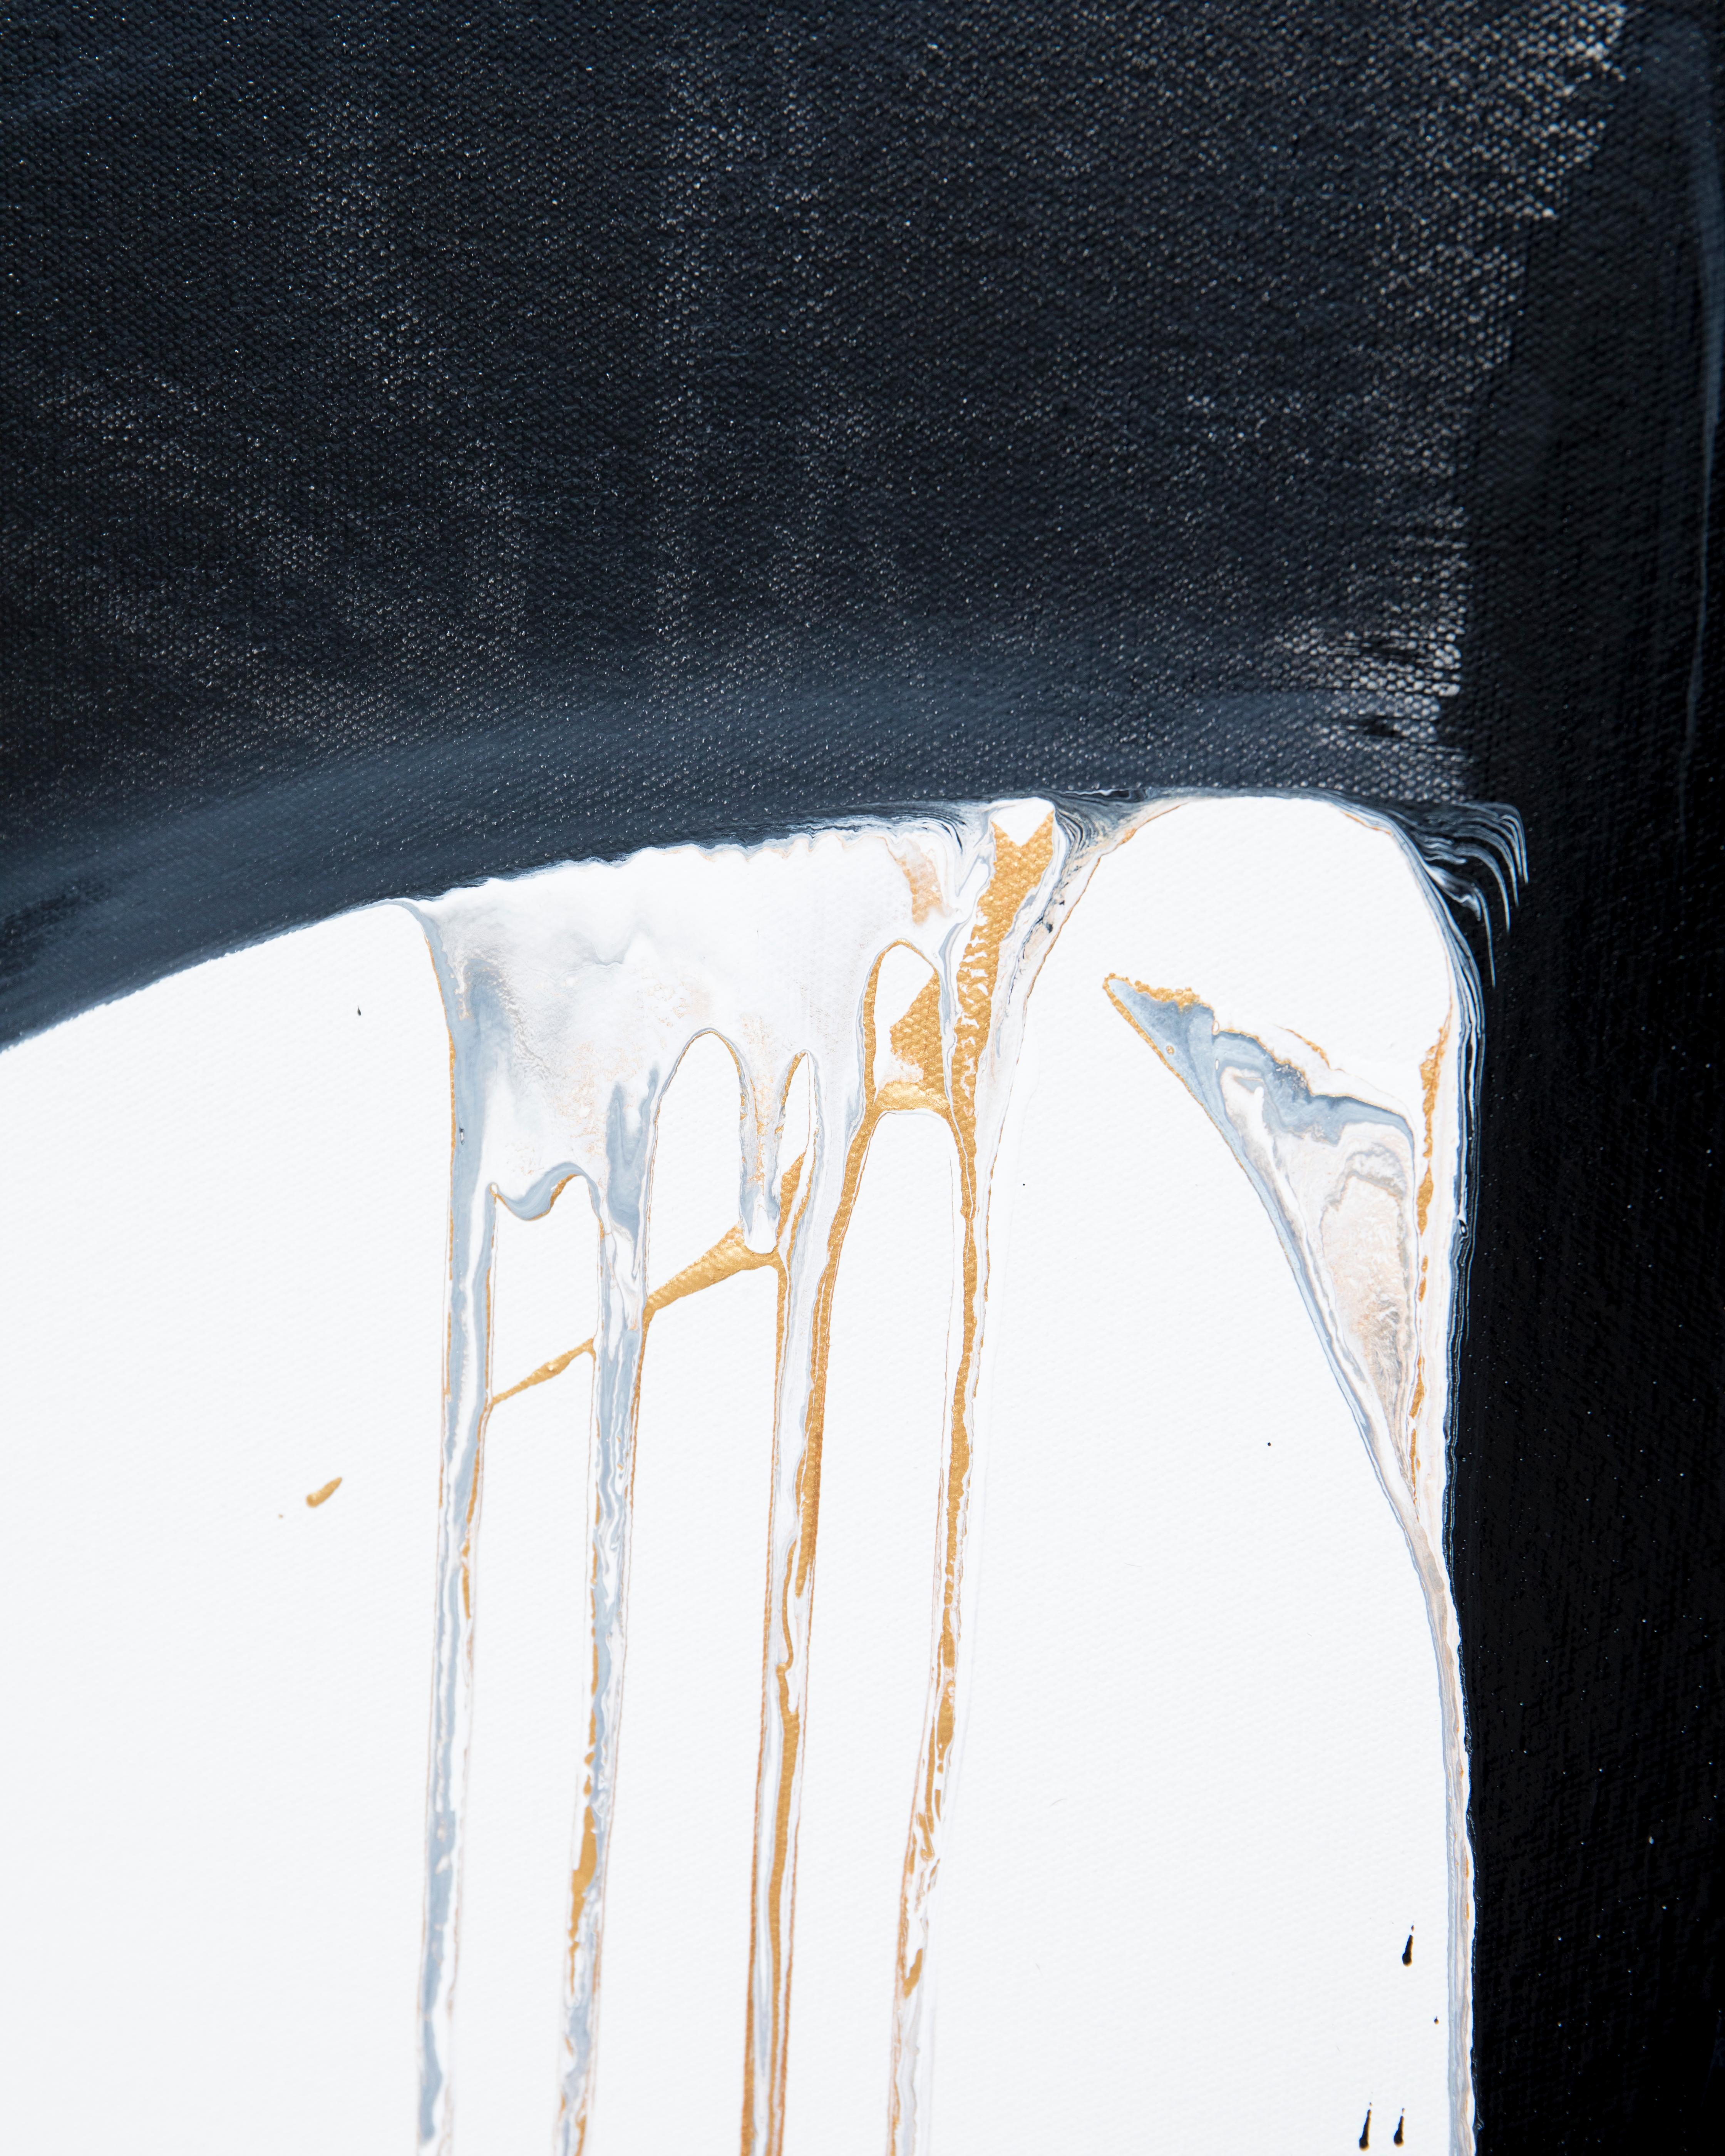 Aidan Rumack

Wiper Painting (Single Blade #2)

30”x40”x1.5”

Acrylic on canvas

2021